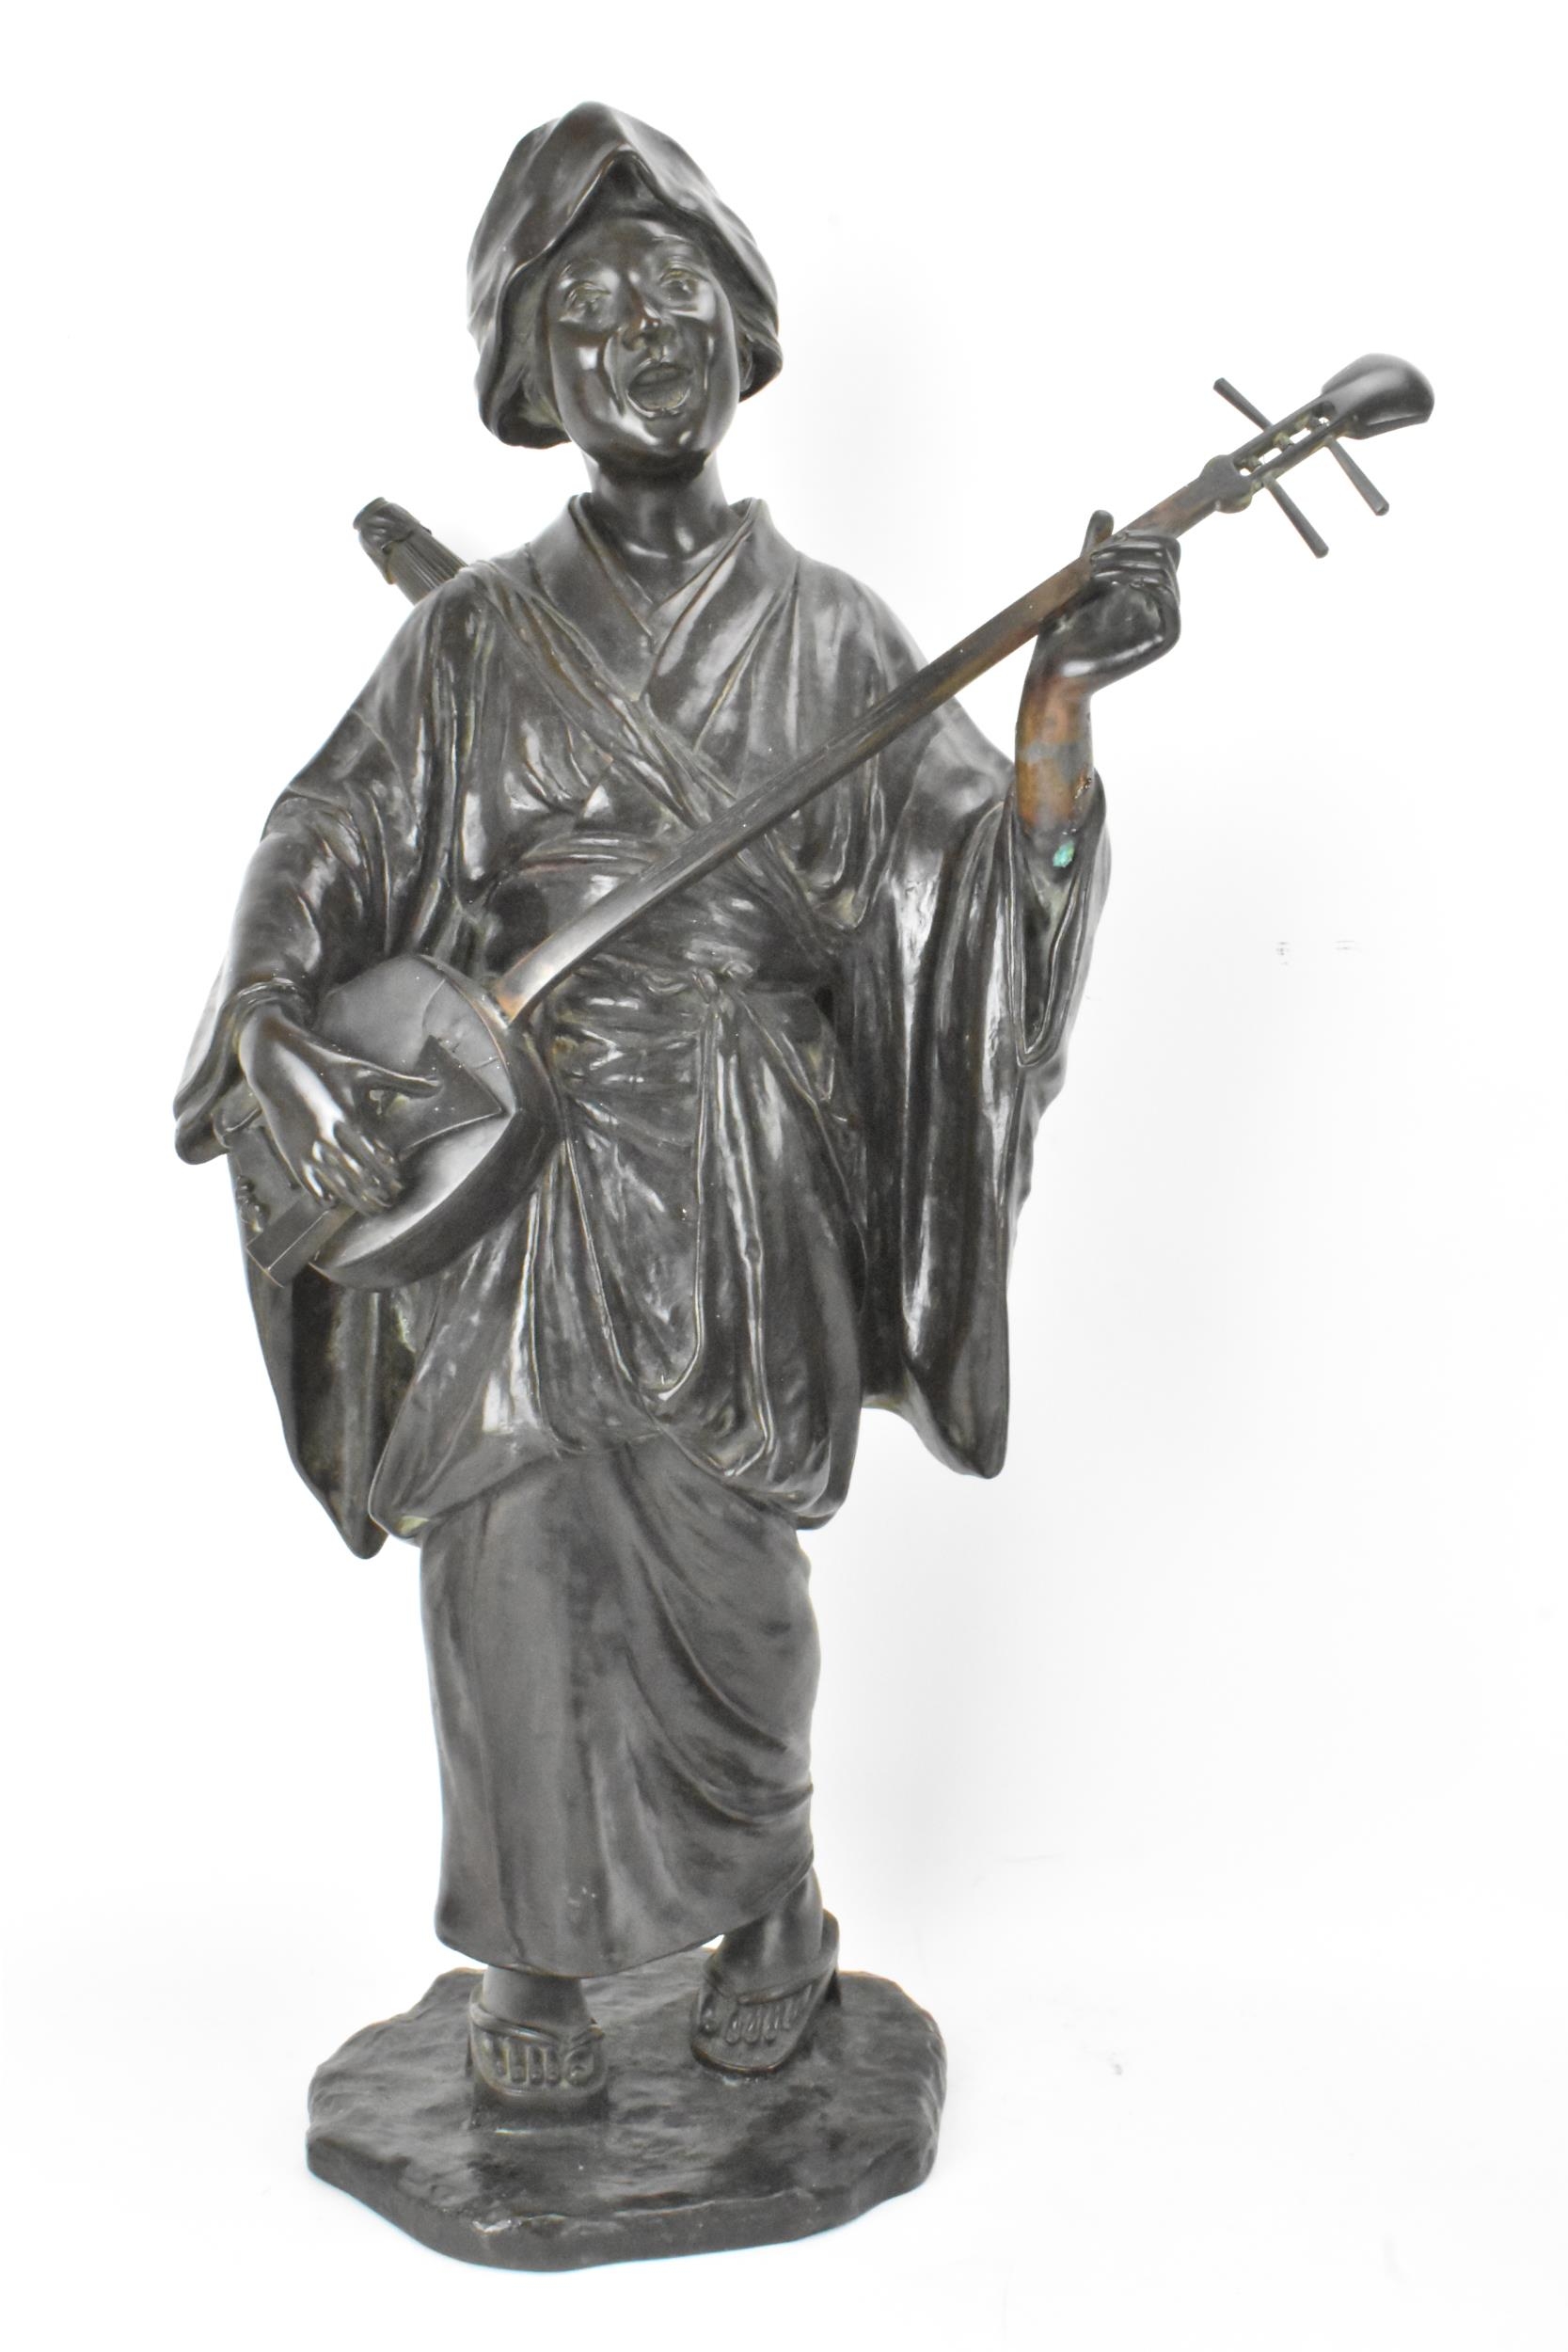 A Japanese Meiji period bronze figure of a bijin musician, wearing a kimono and playing a shamisen